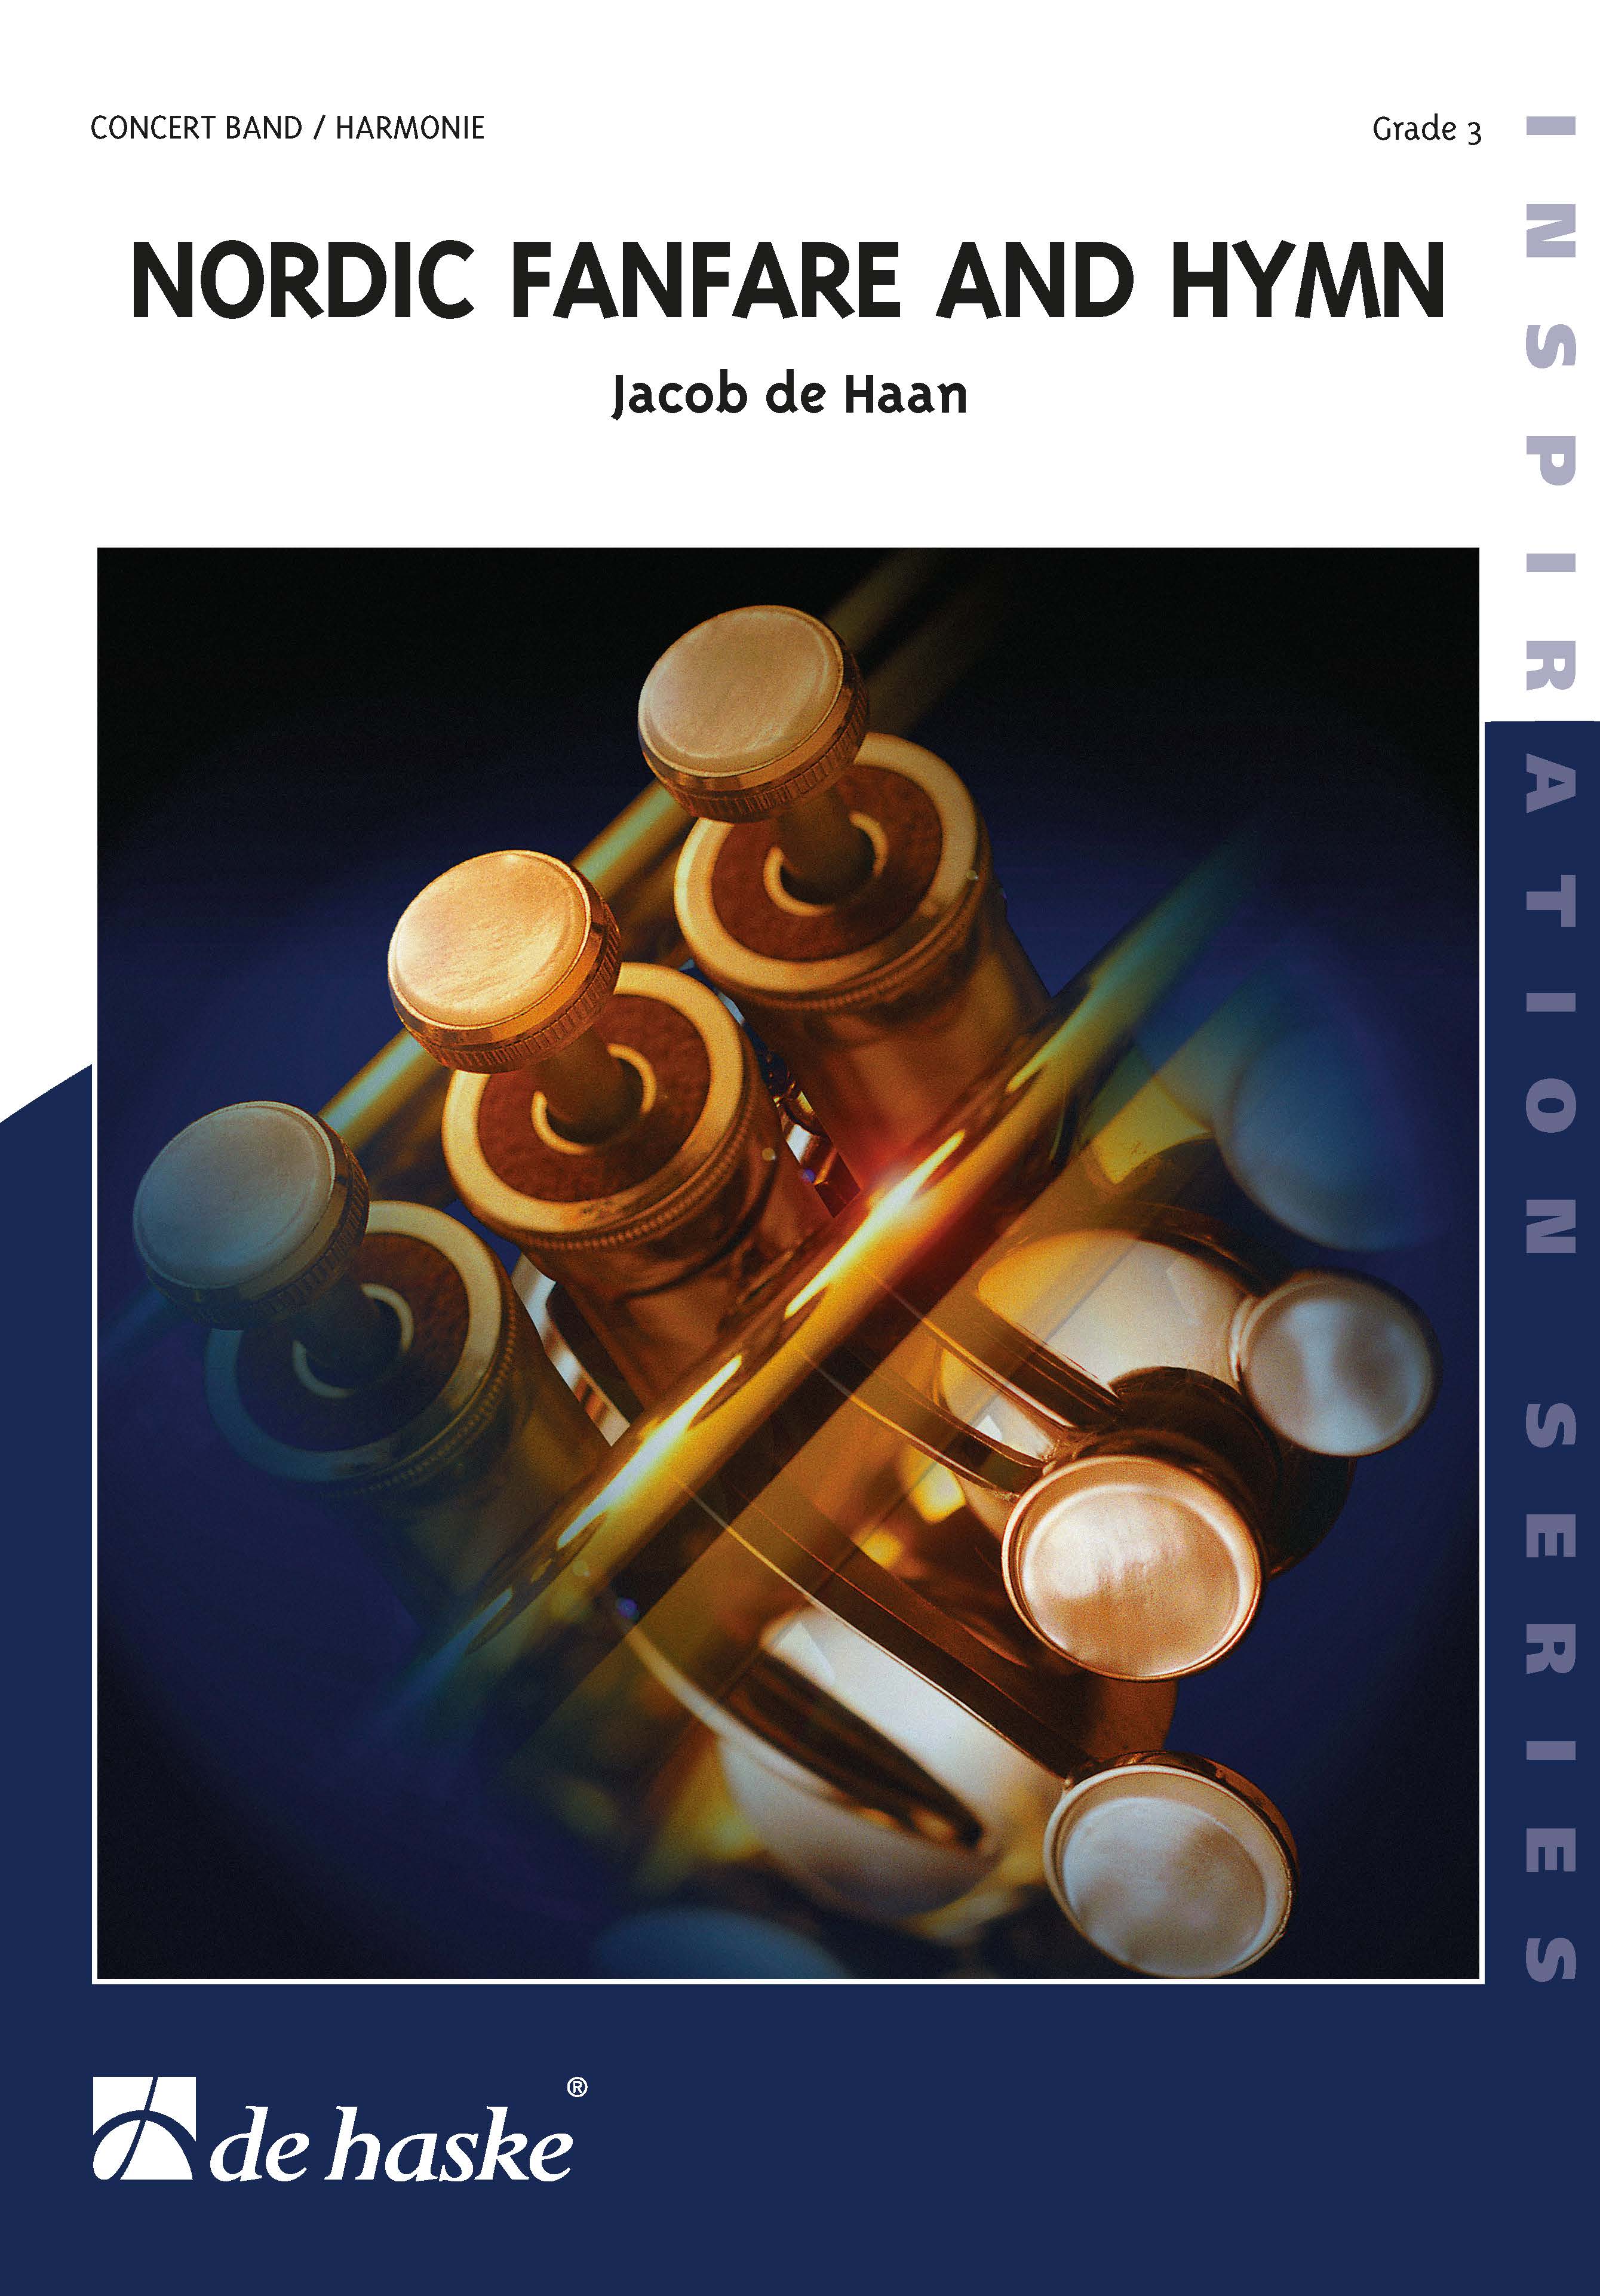 Jacob de Haan: Nordic Fanfare and Hymn: Concert Band: Score